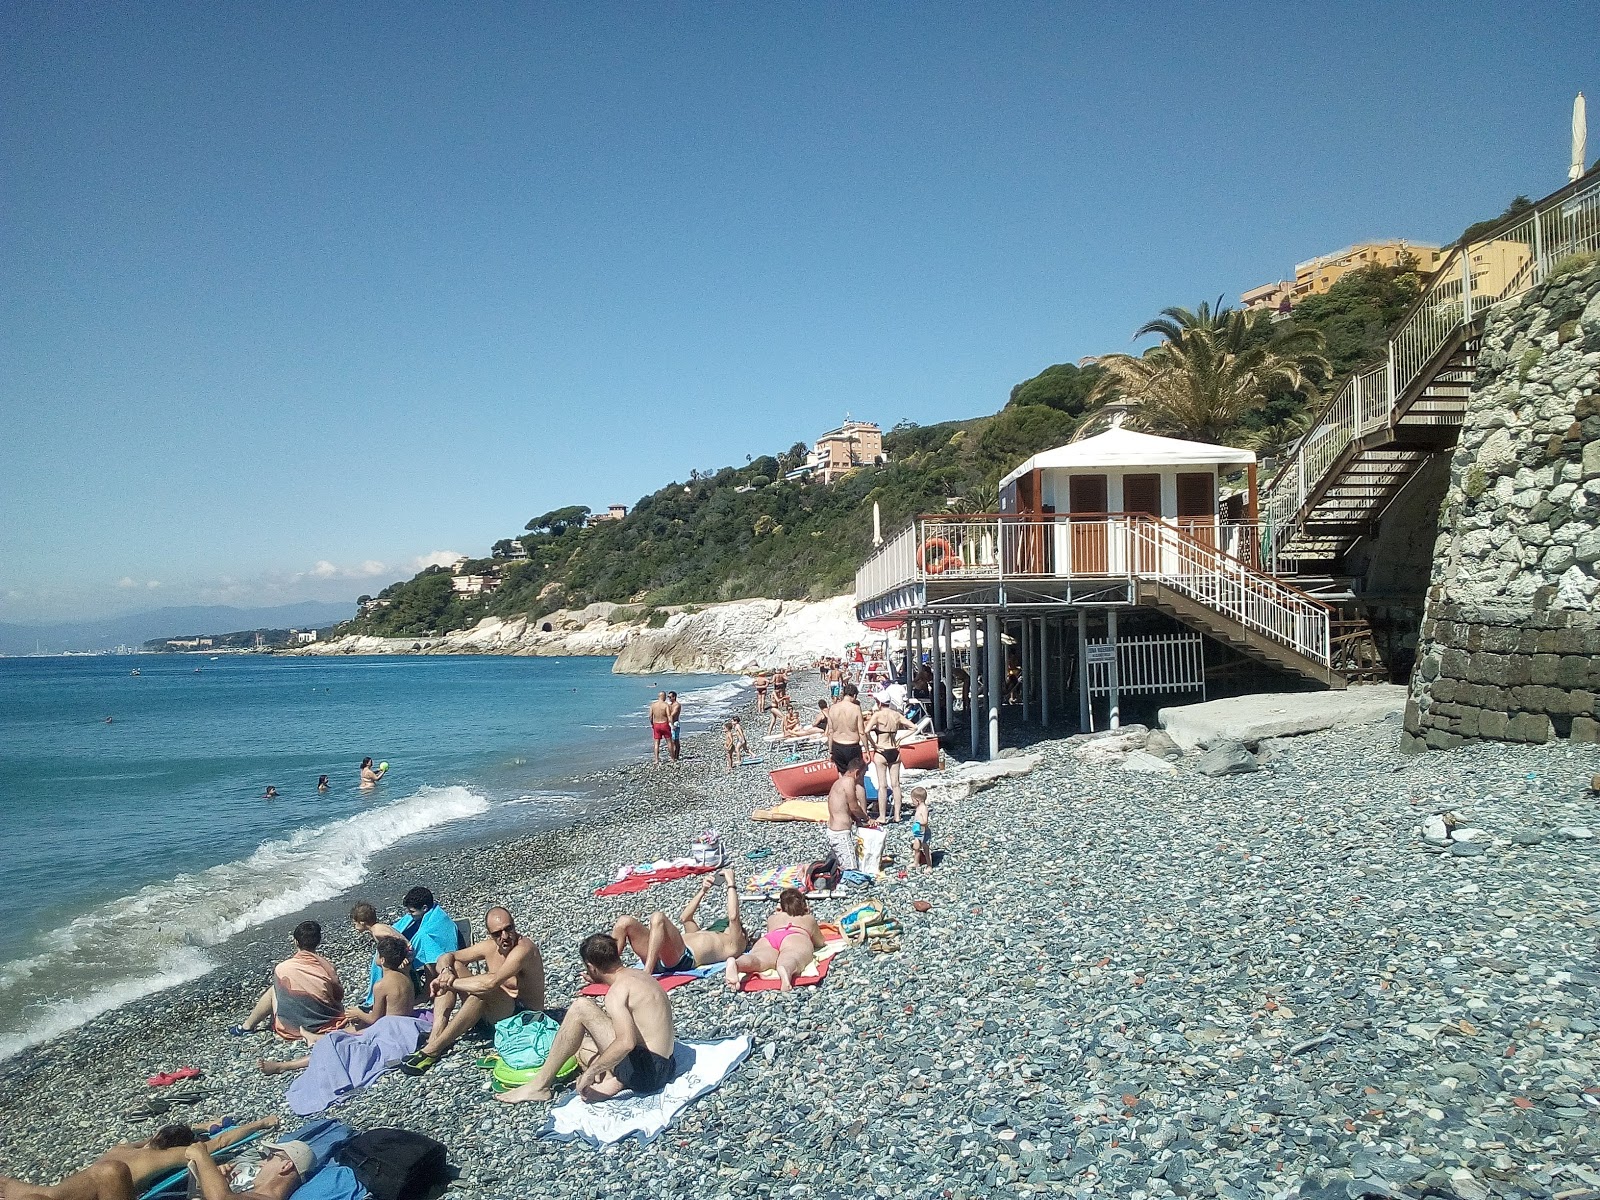 Foto av Spiaggia libera Abbelinou med hög nivå av renlighet